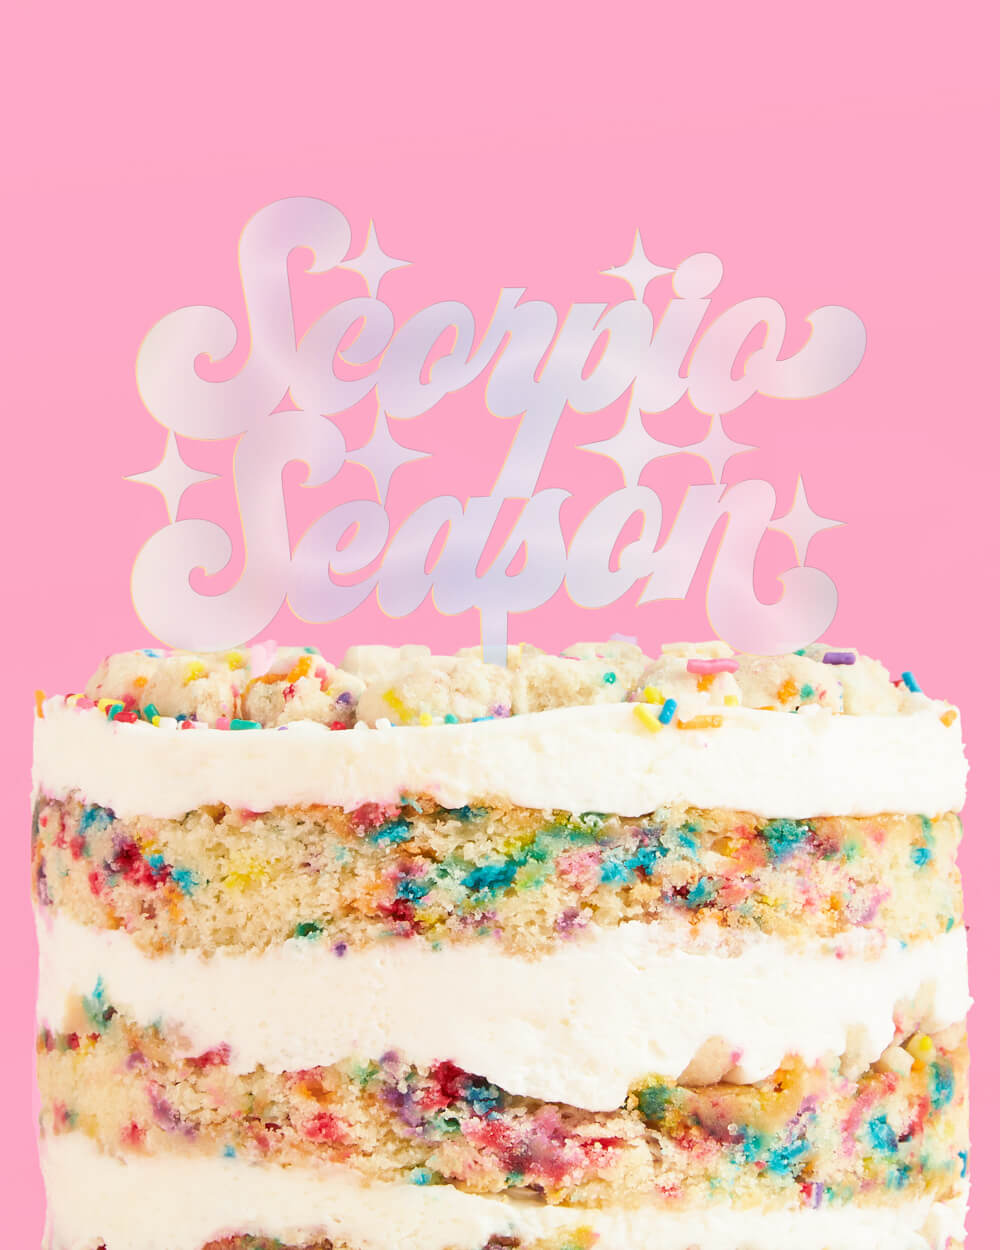 It's scorpio season | Pretty birthday cakes, Mini cakes birthday, Cute  birthday cakes